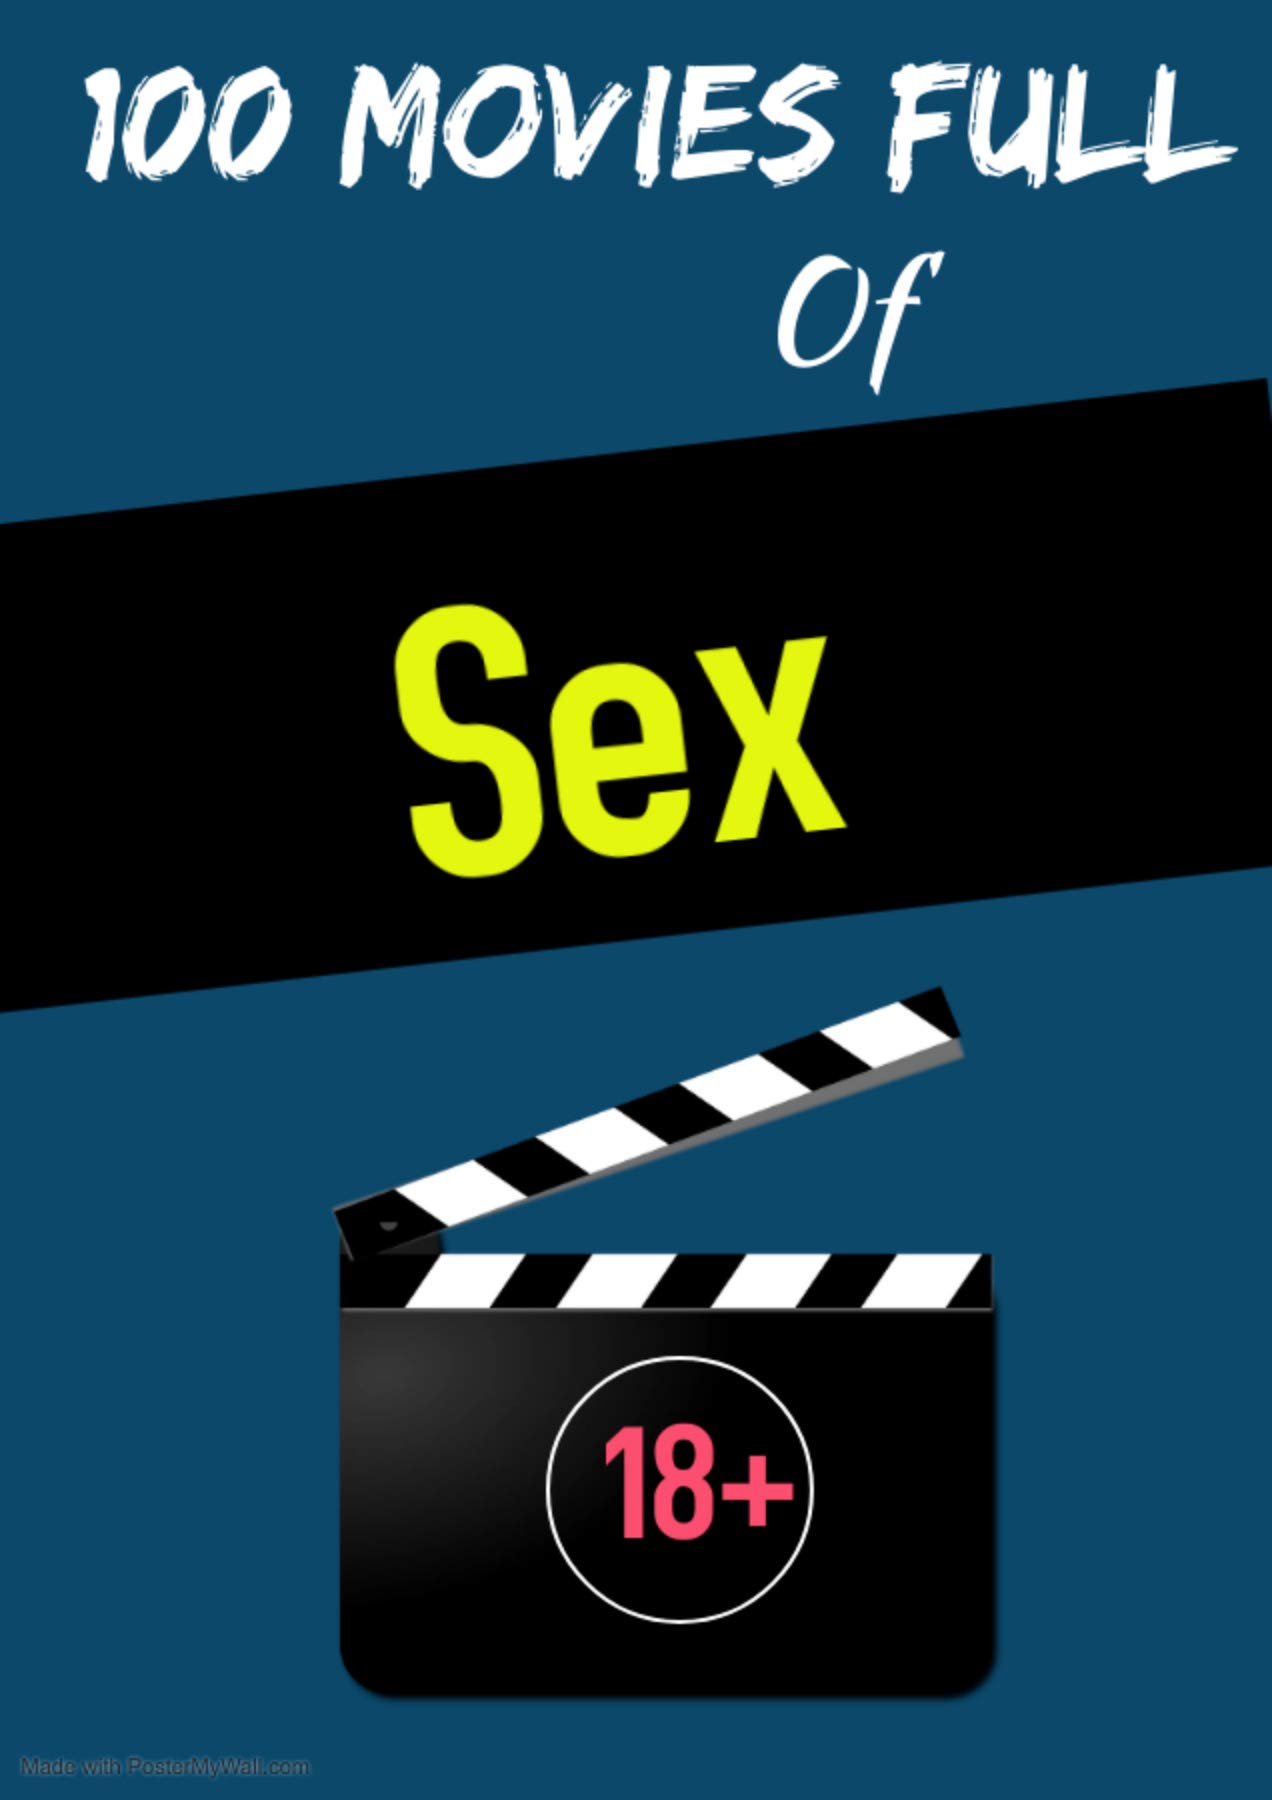 celeste lee graham recommends 100 Free Sex Movies